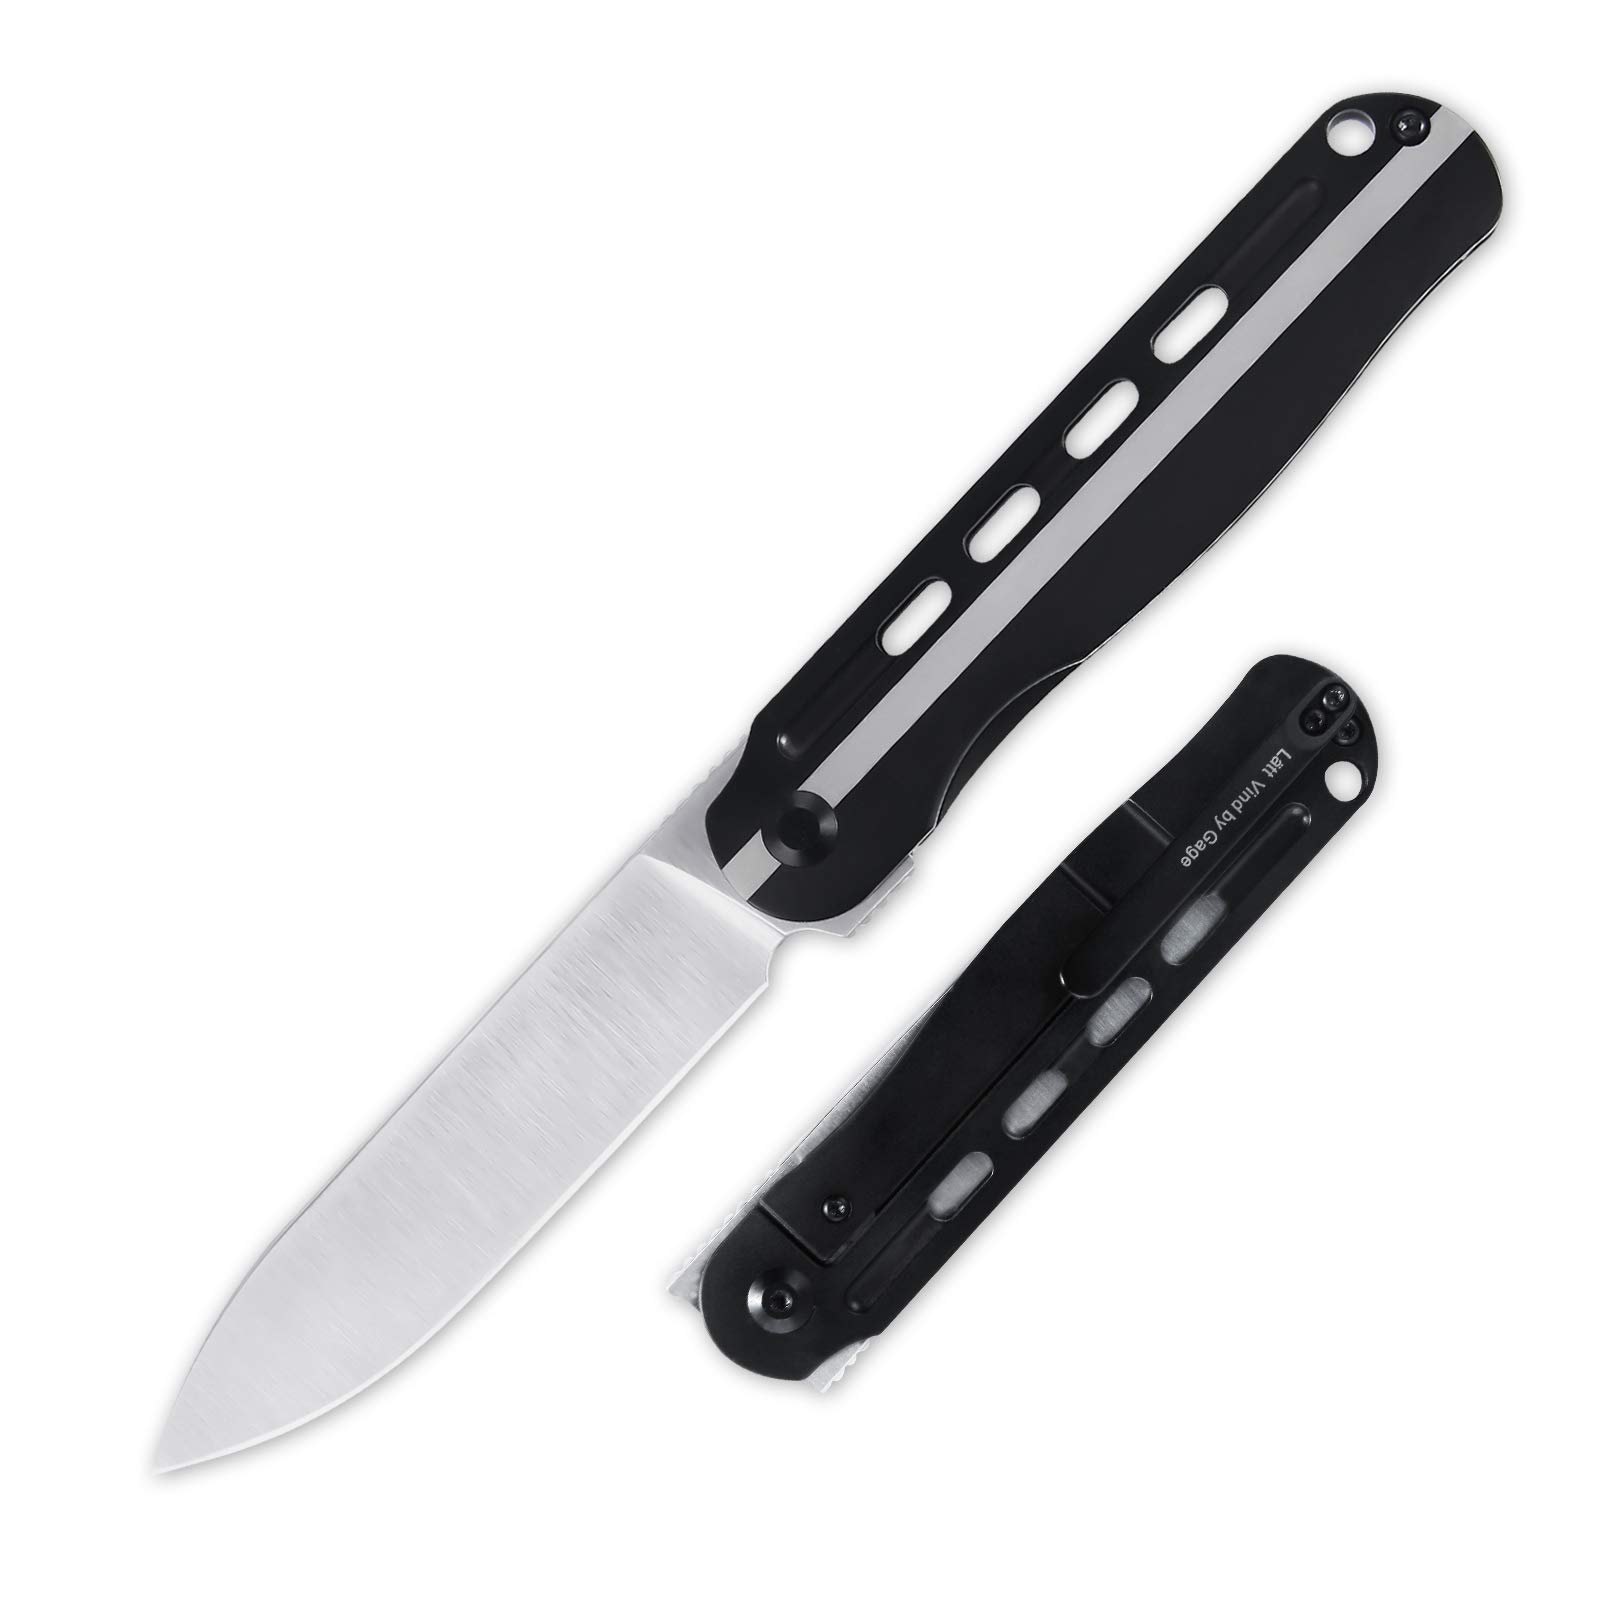 Kizer Titanium Folding Knives S35VN Blade and Black Handle with Pocket Clip Ltt Vind Ki4567A1並行輸入品